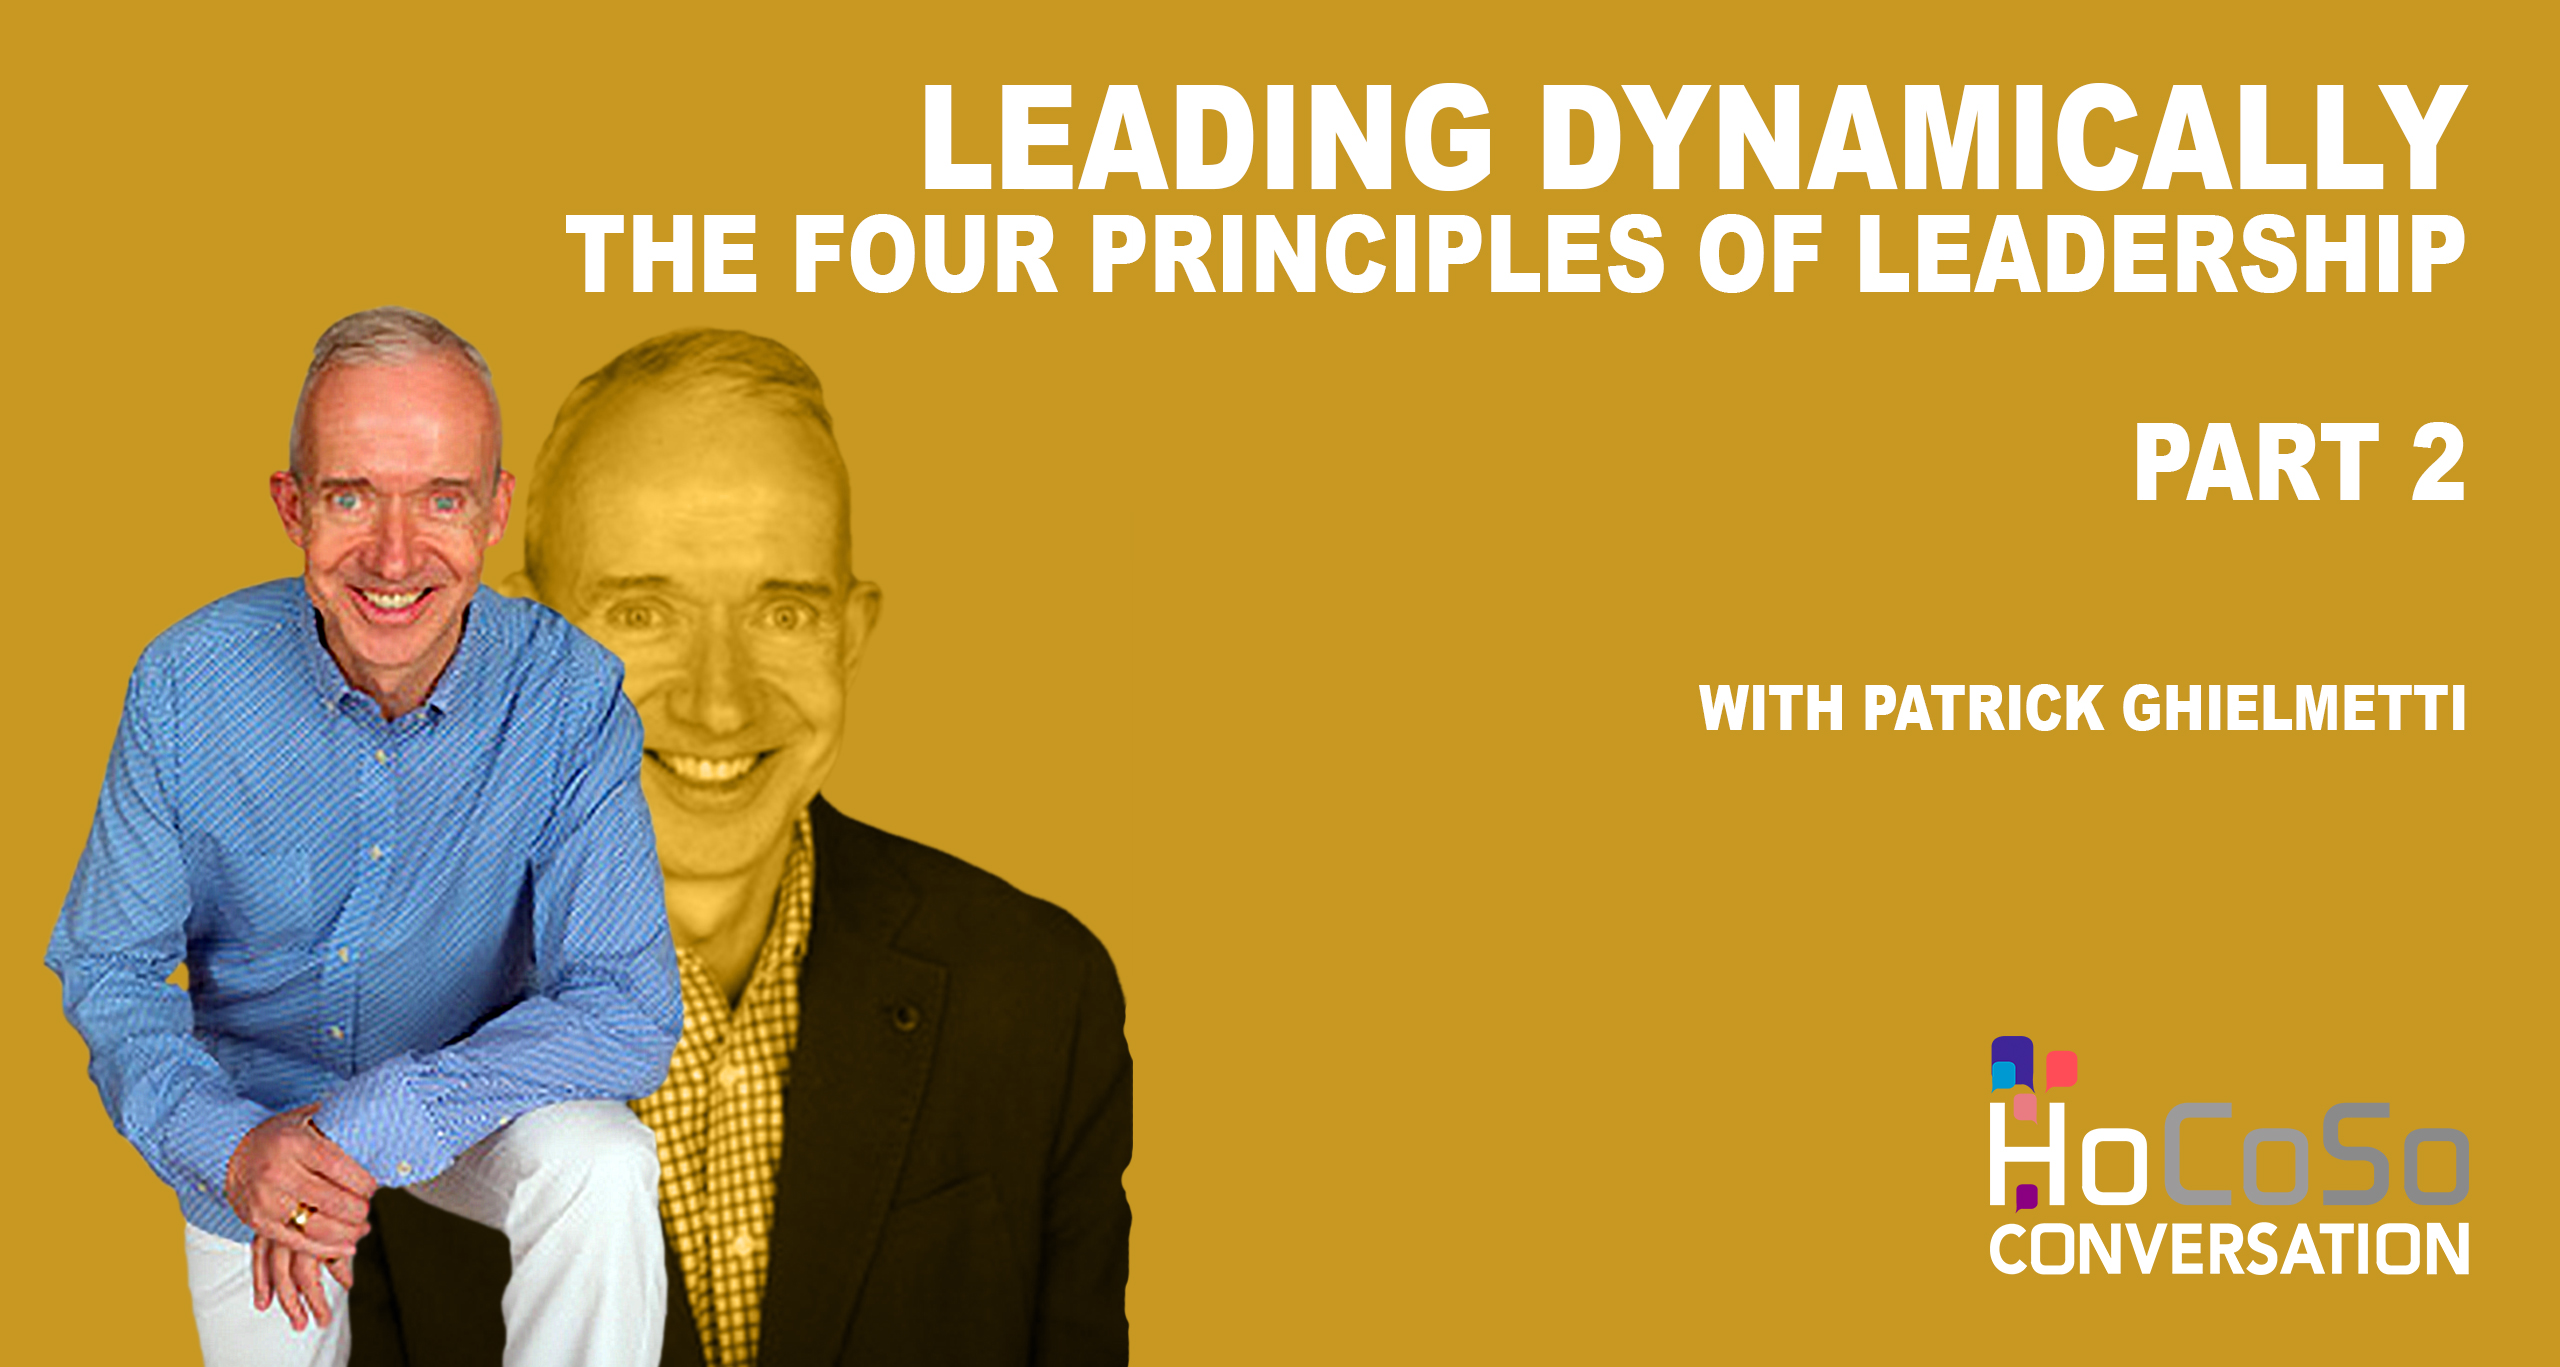 Leading Dynamically - Part 2 - Patrick Ghielmetti for HoCoSo CONVERSATION